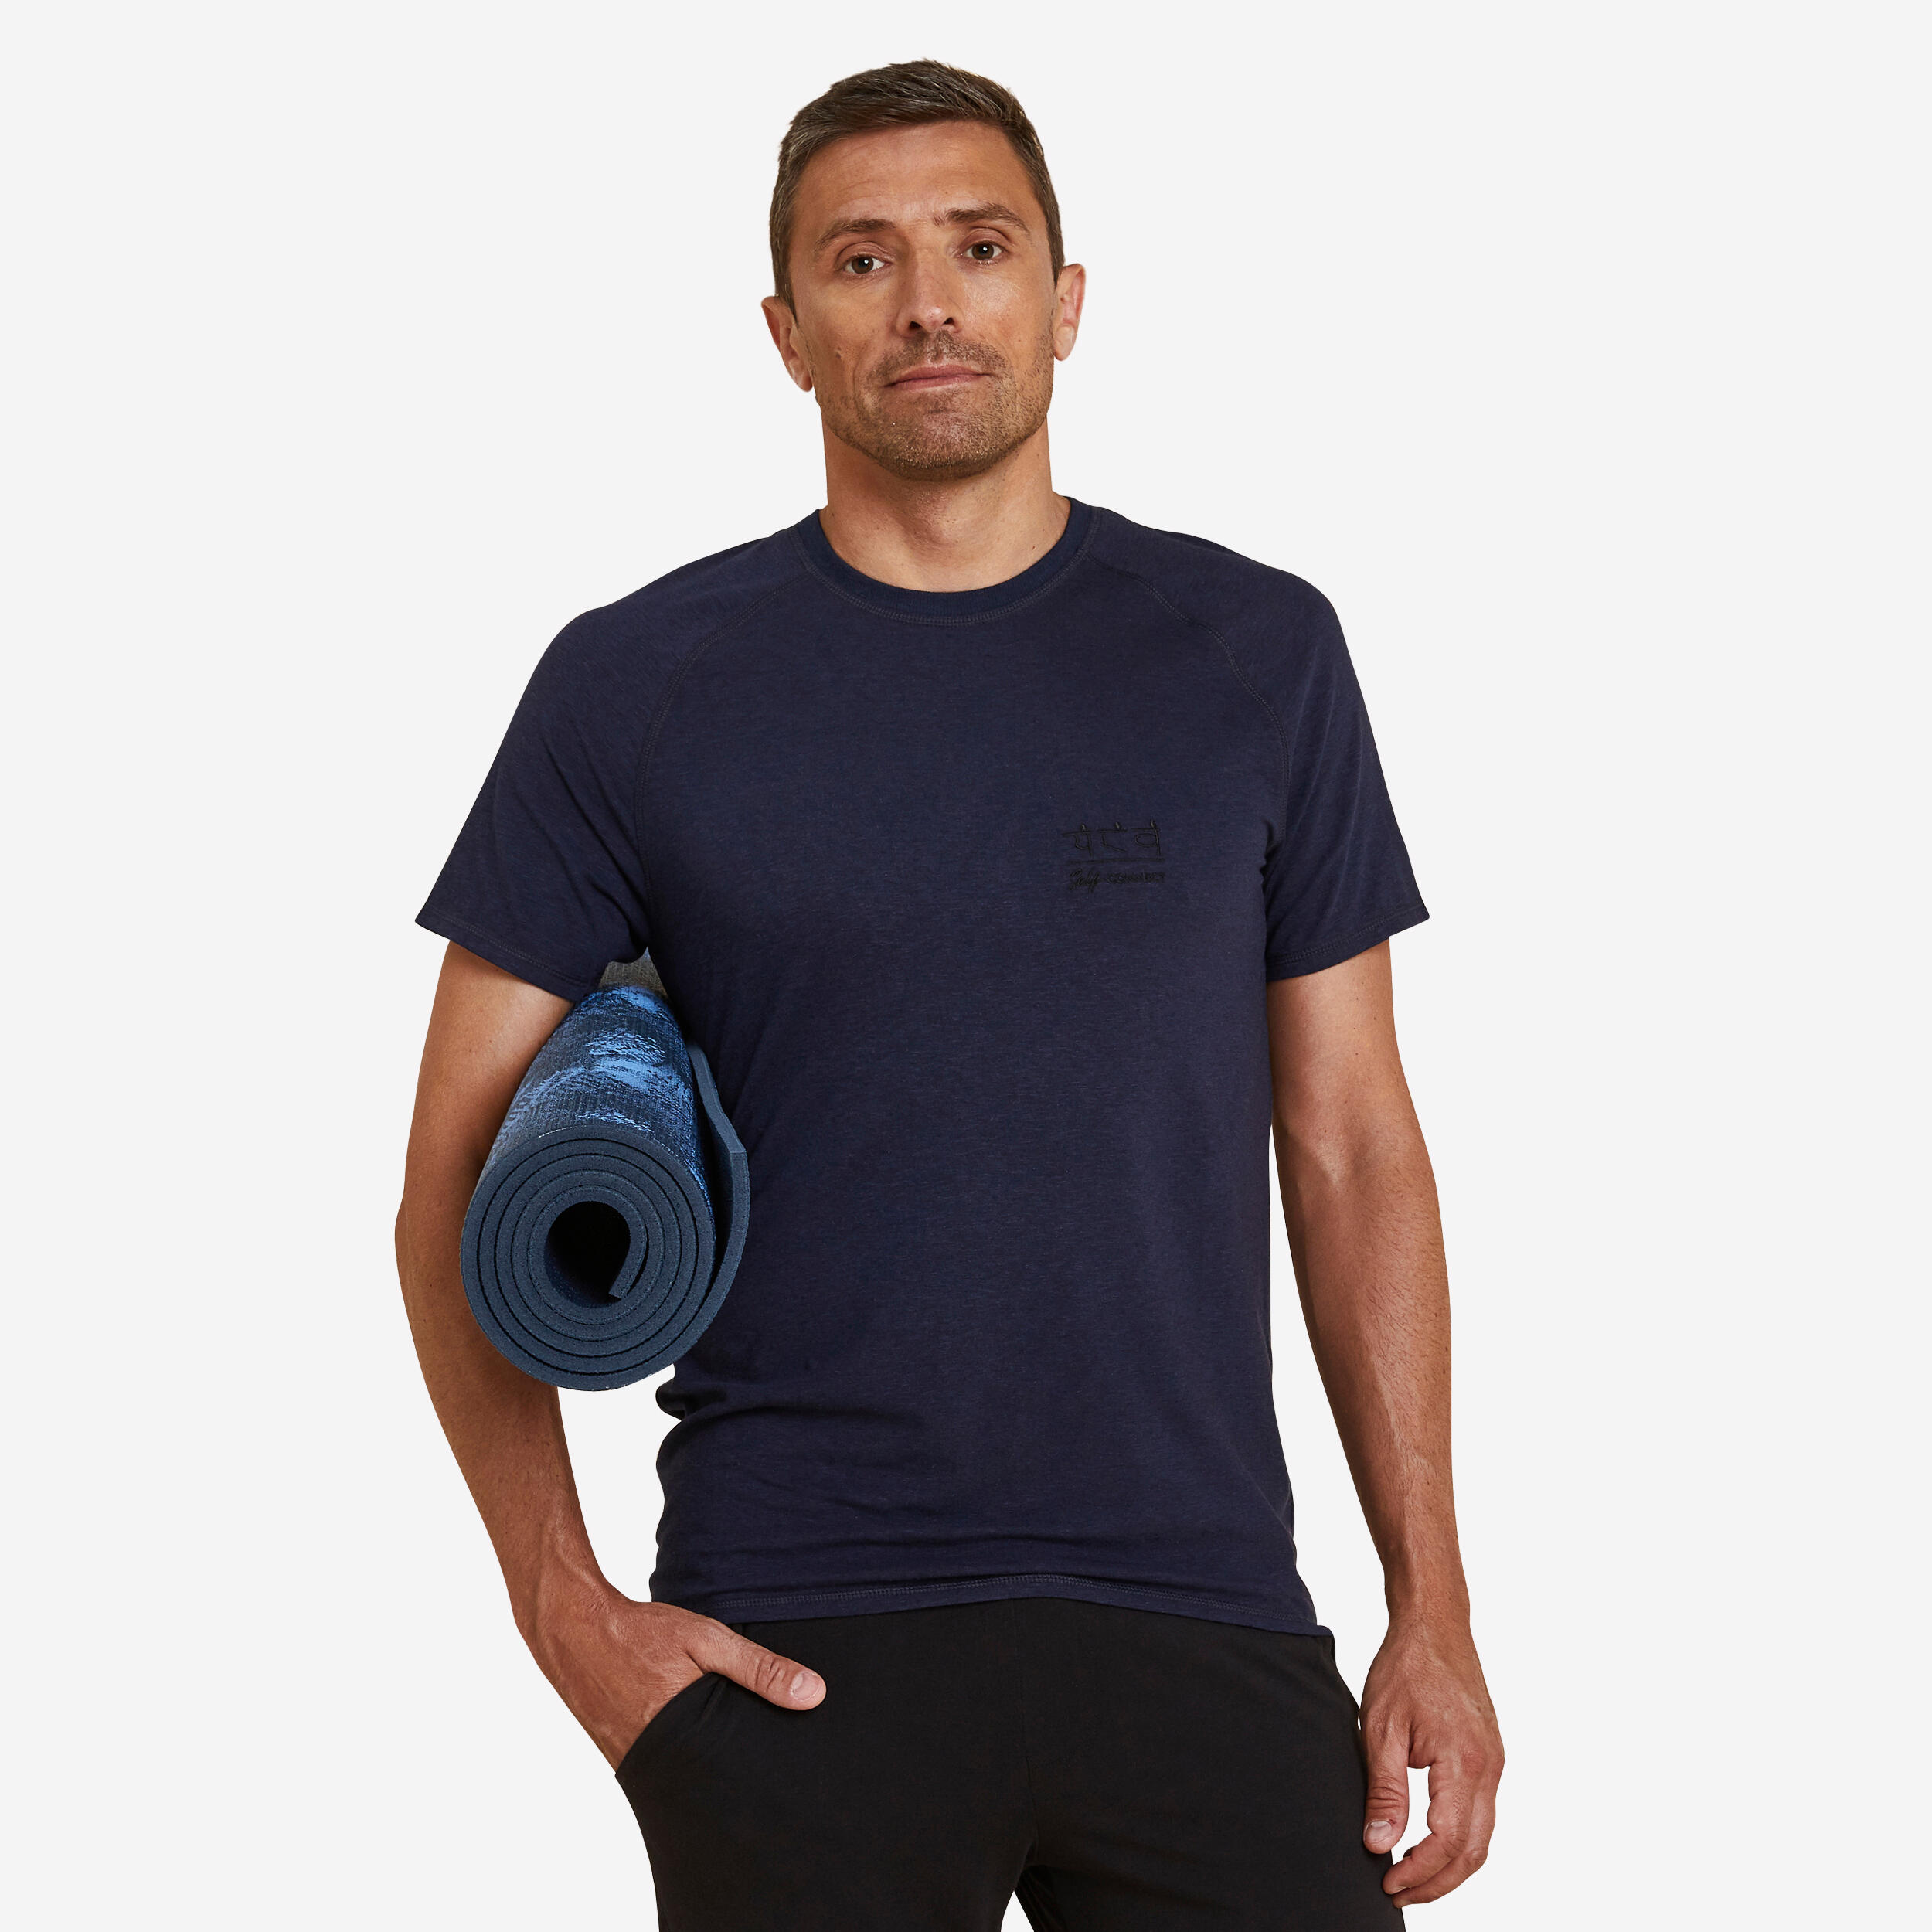 Men's Short-Sleeved Gentle Yoga T-Shirt - Navy Blue 1/4